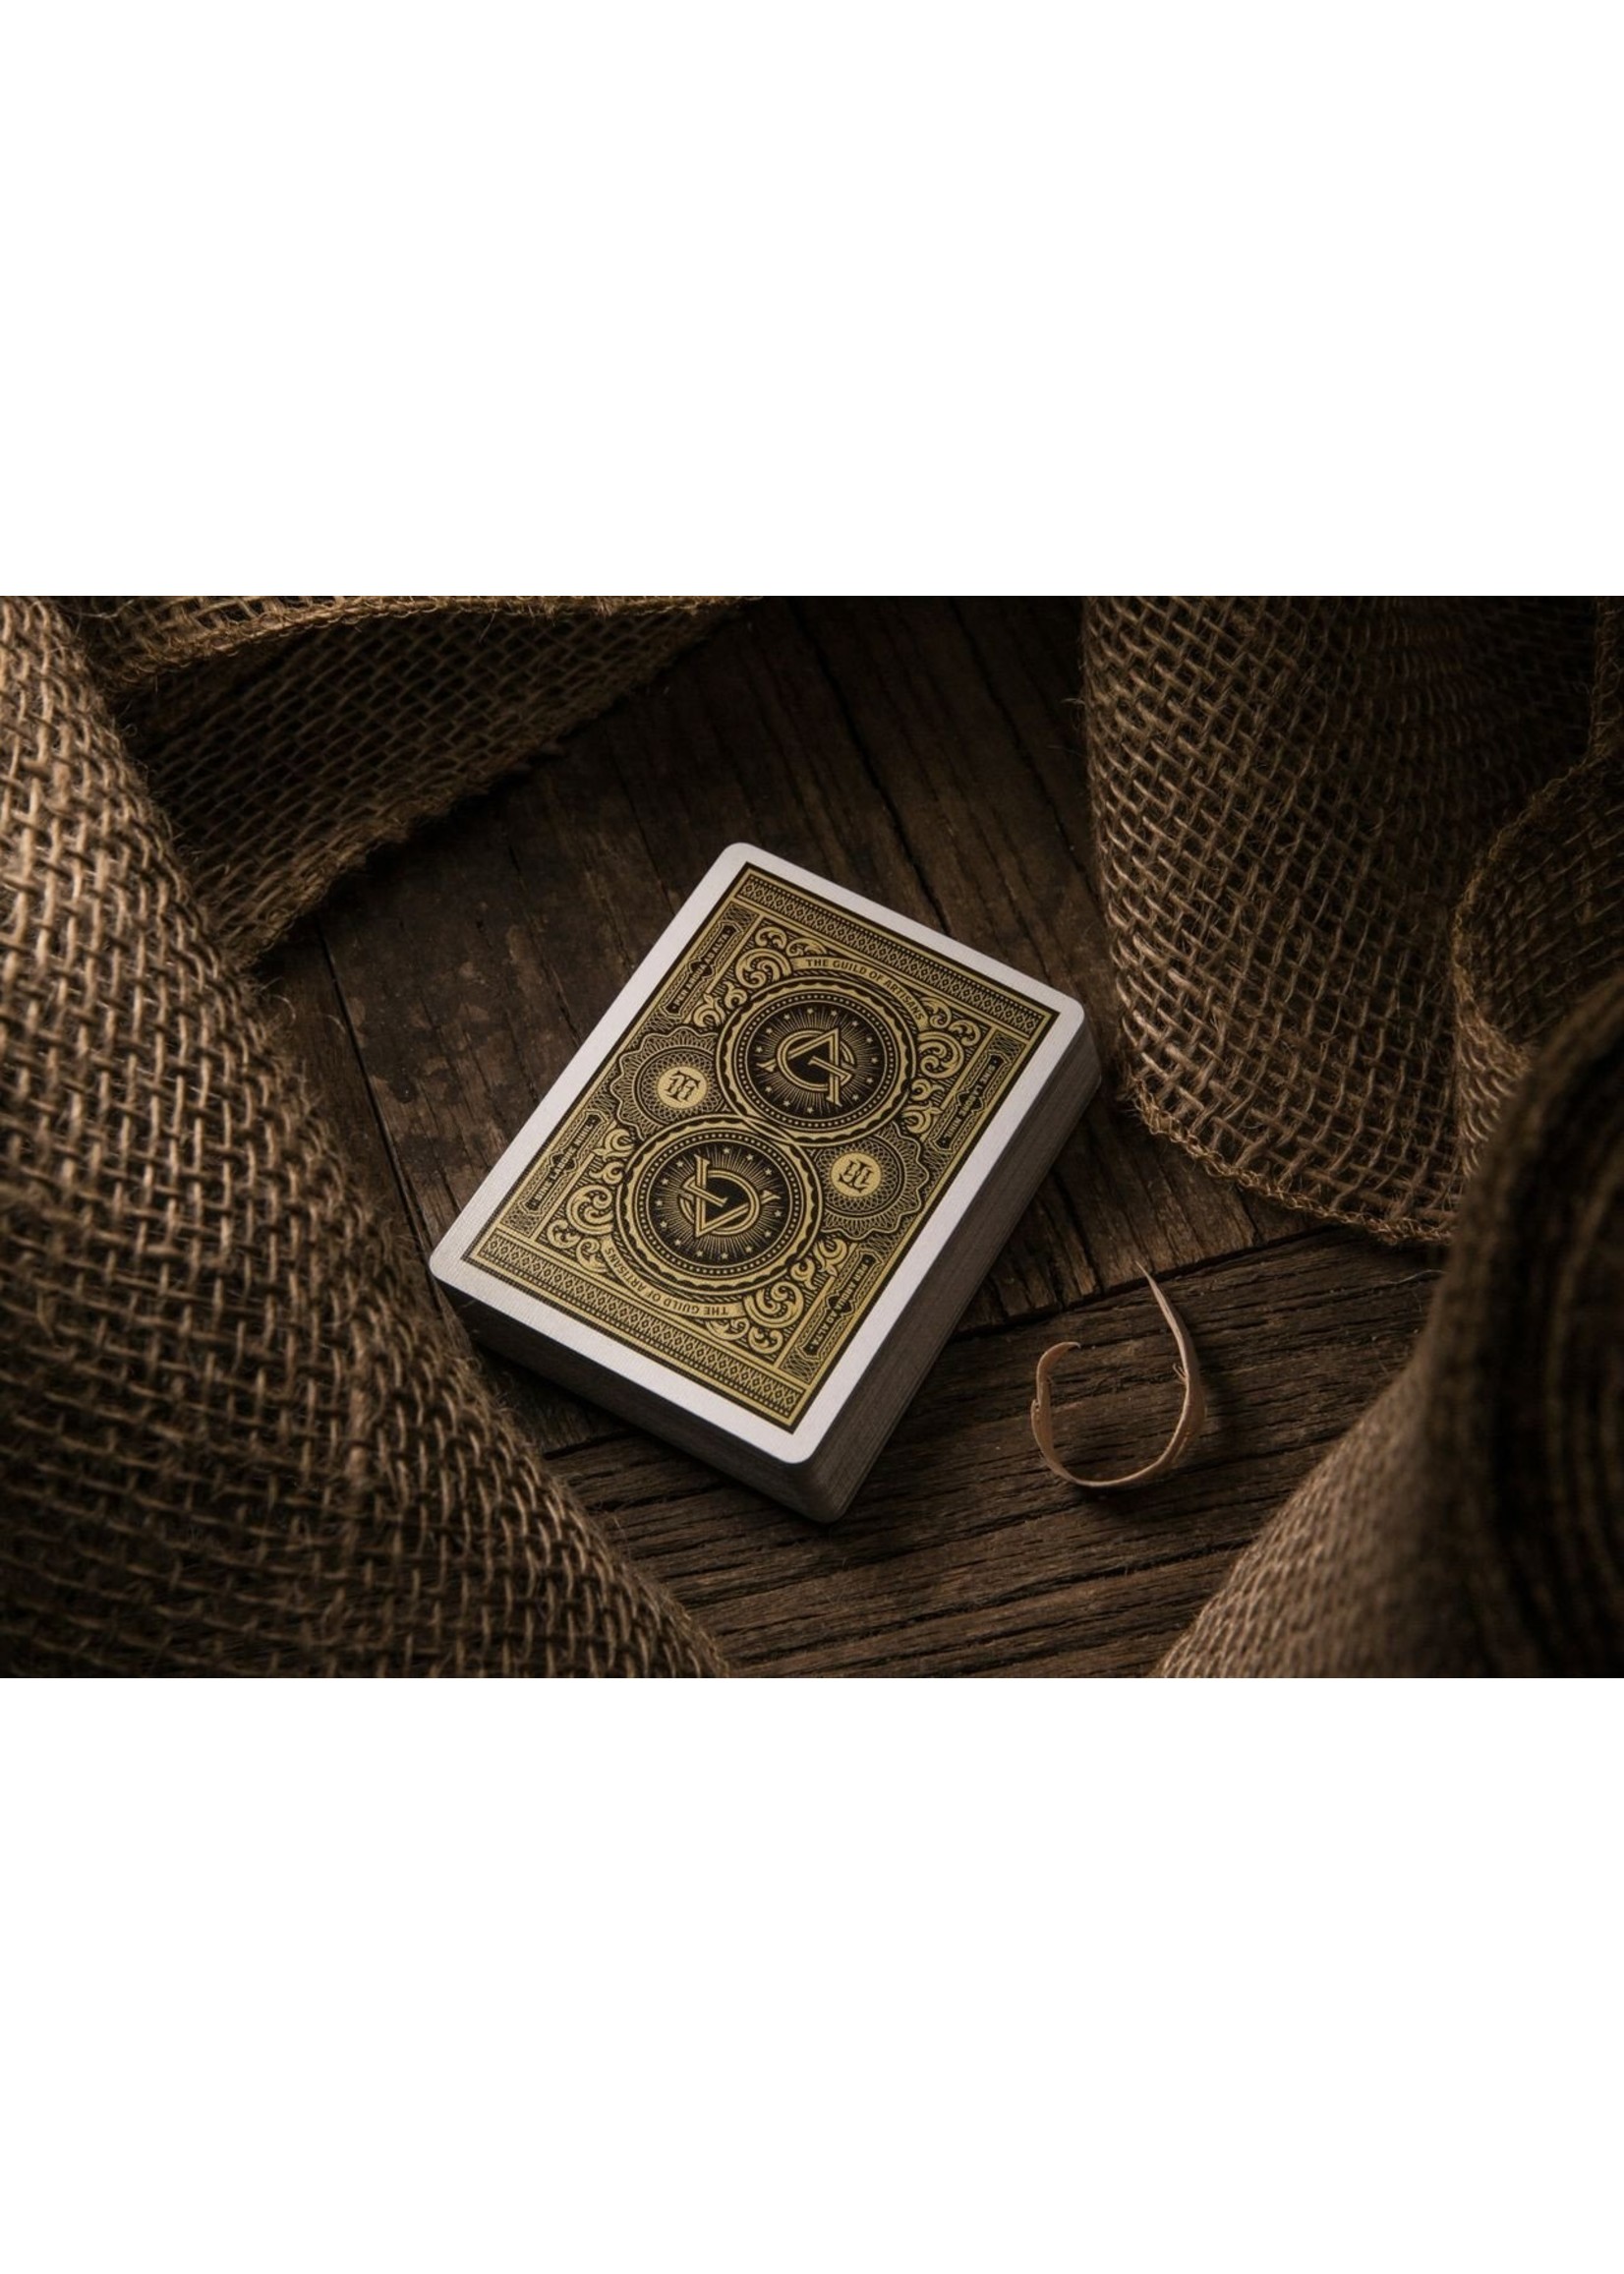 Theory11 Theory11:  Artisan Playing Cards